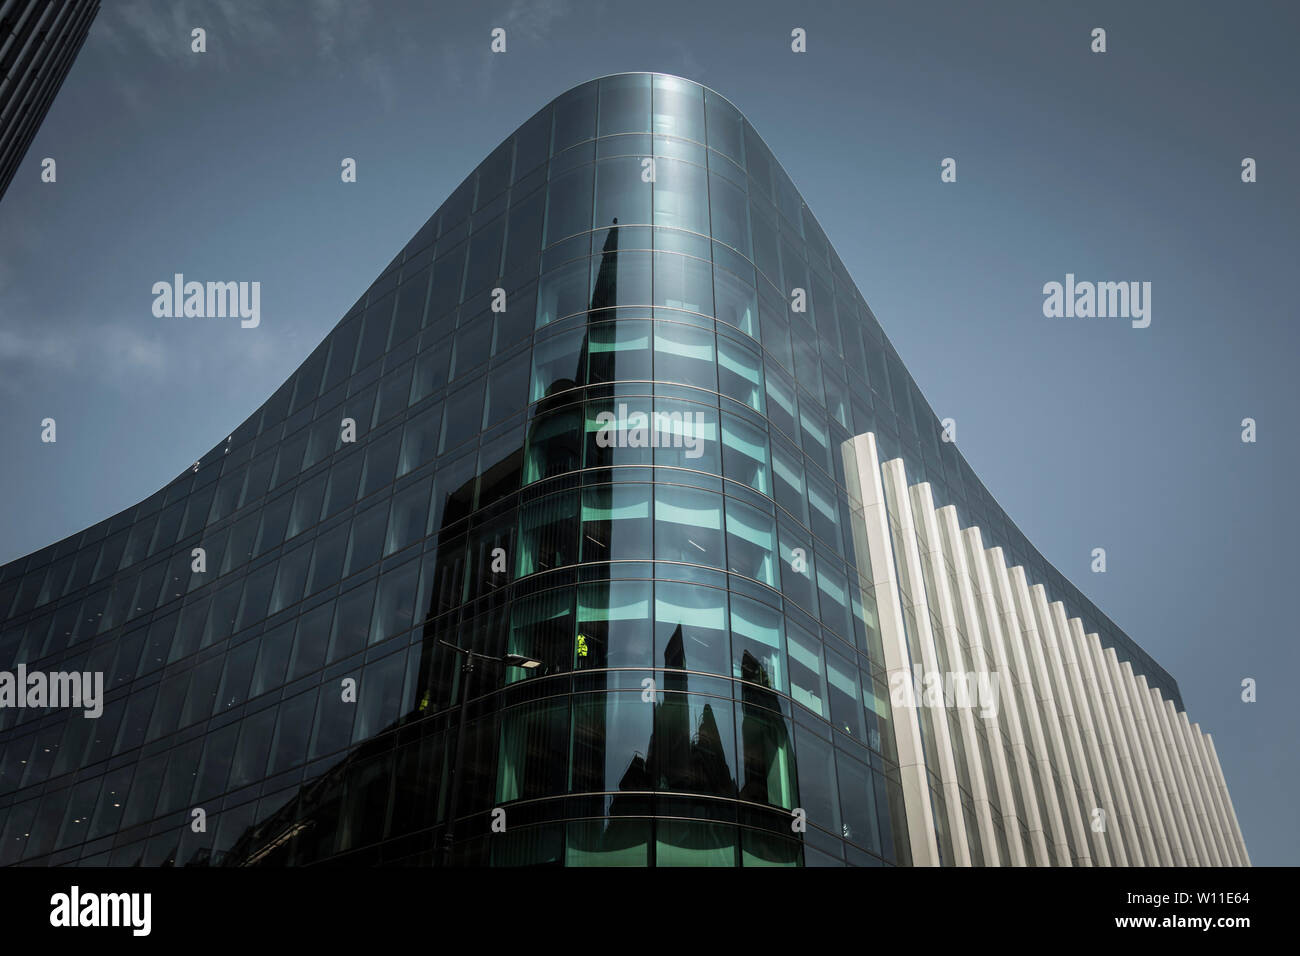 Goldman Sachs' Plumtree Court European headquarters building on Stonecutter Street, City of London, UK Stock Photo